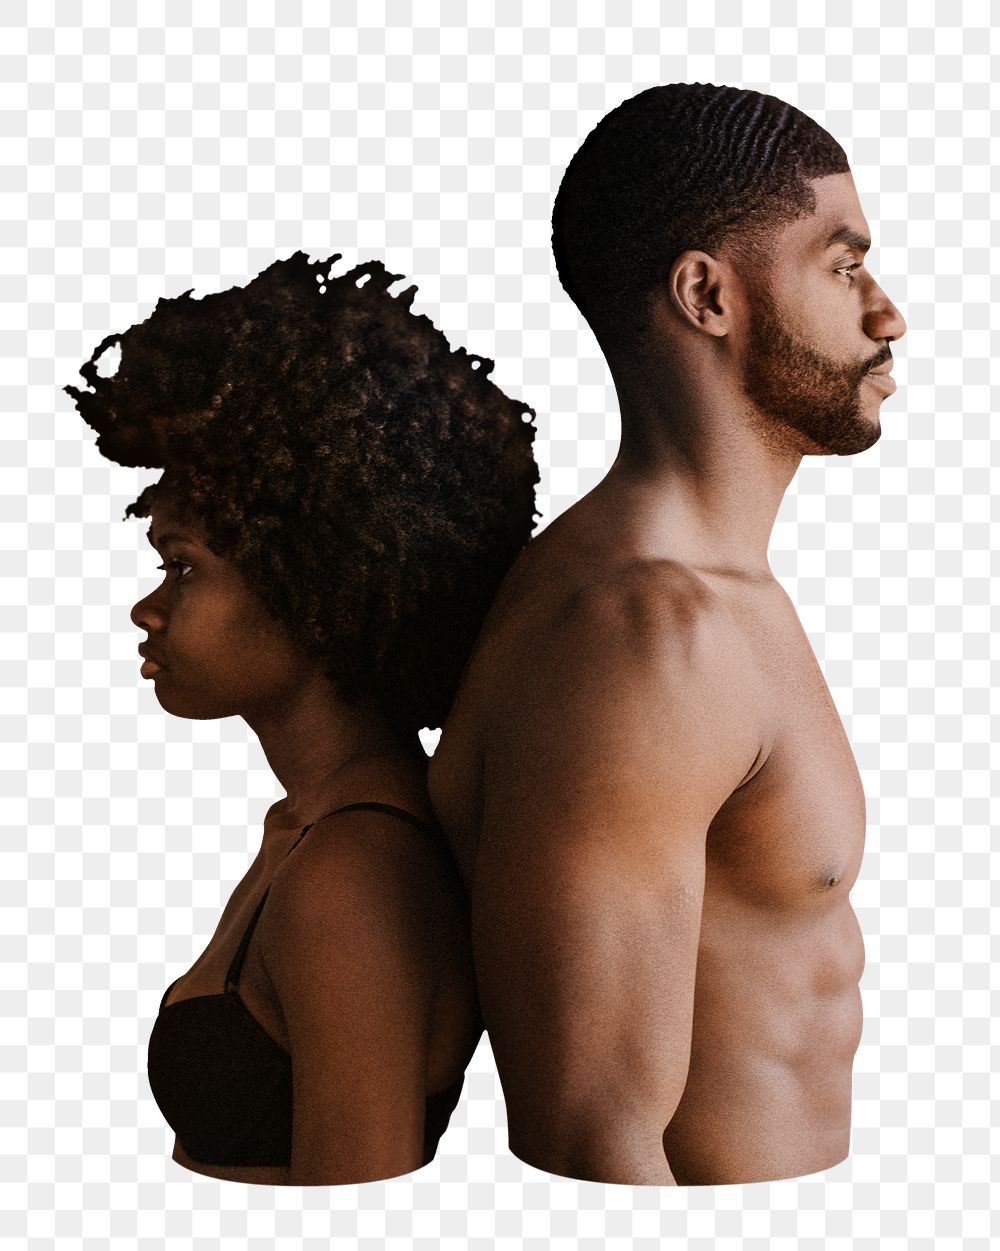 Seminude black couple png sticker, transparent background